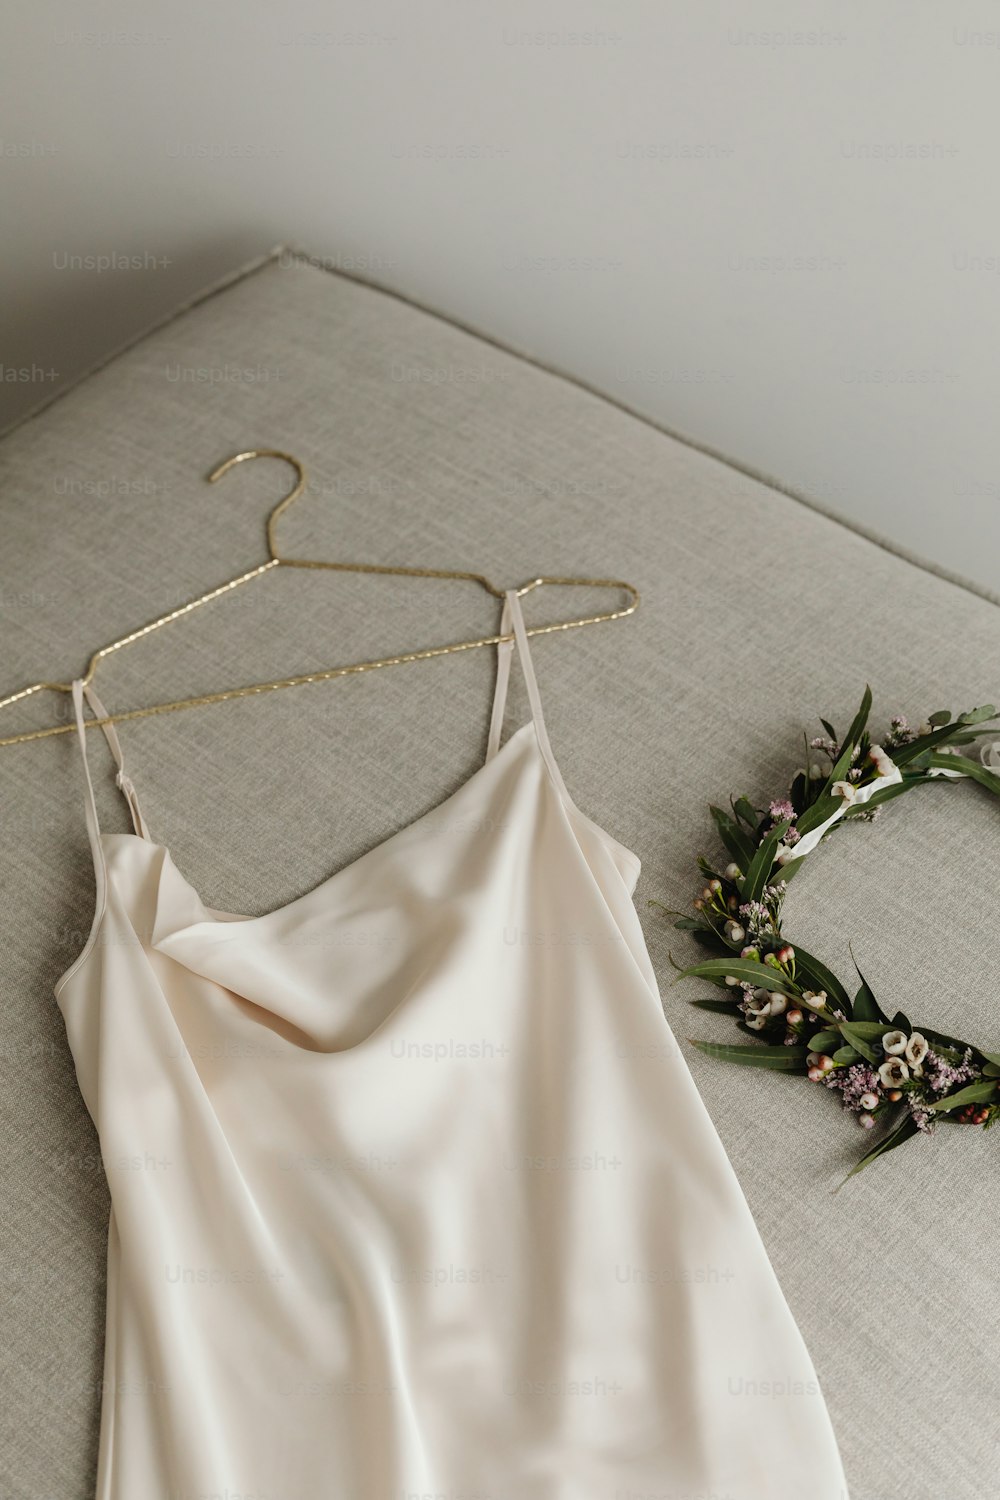 a dress hanging on a hanger next to a flower wreath